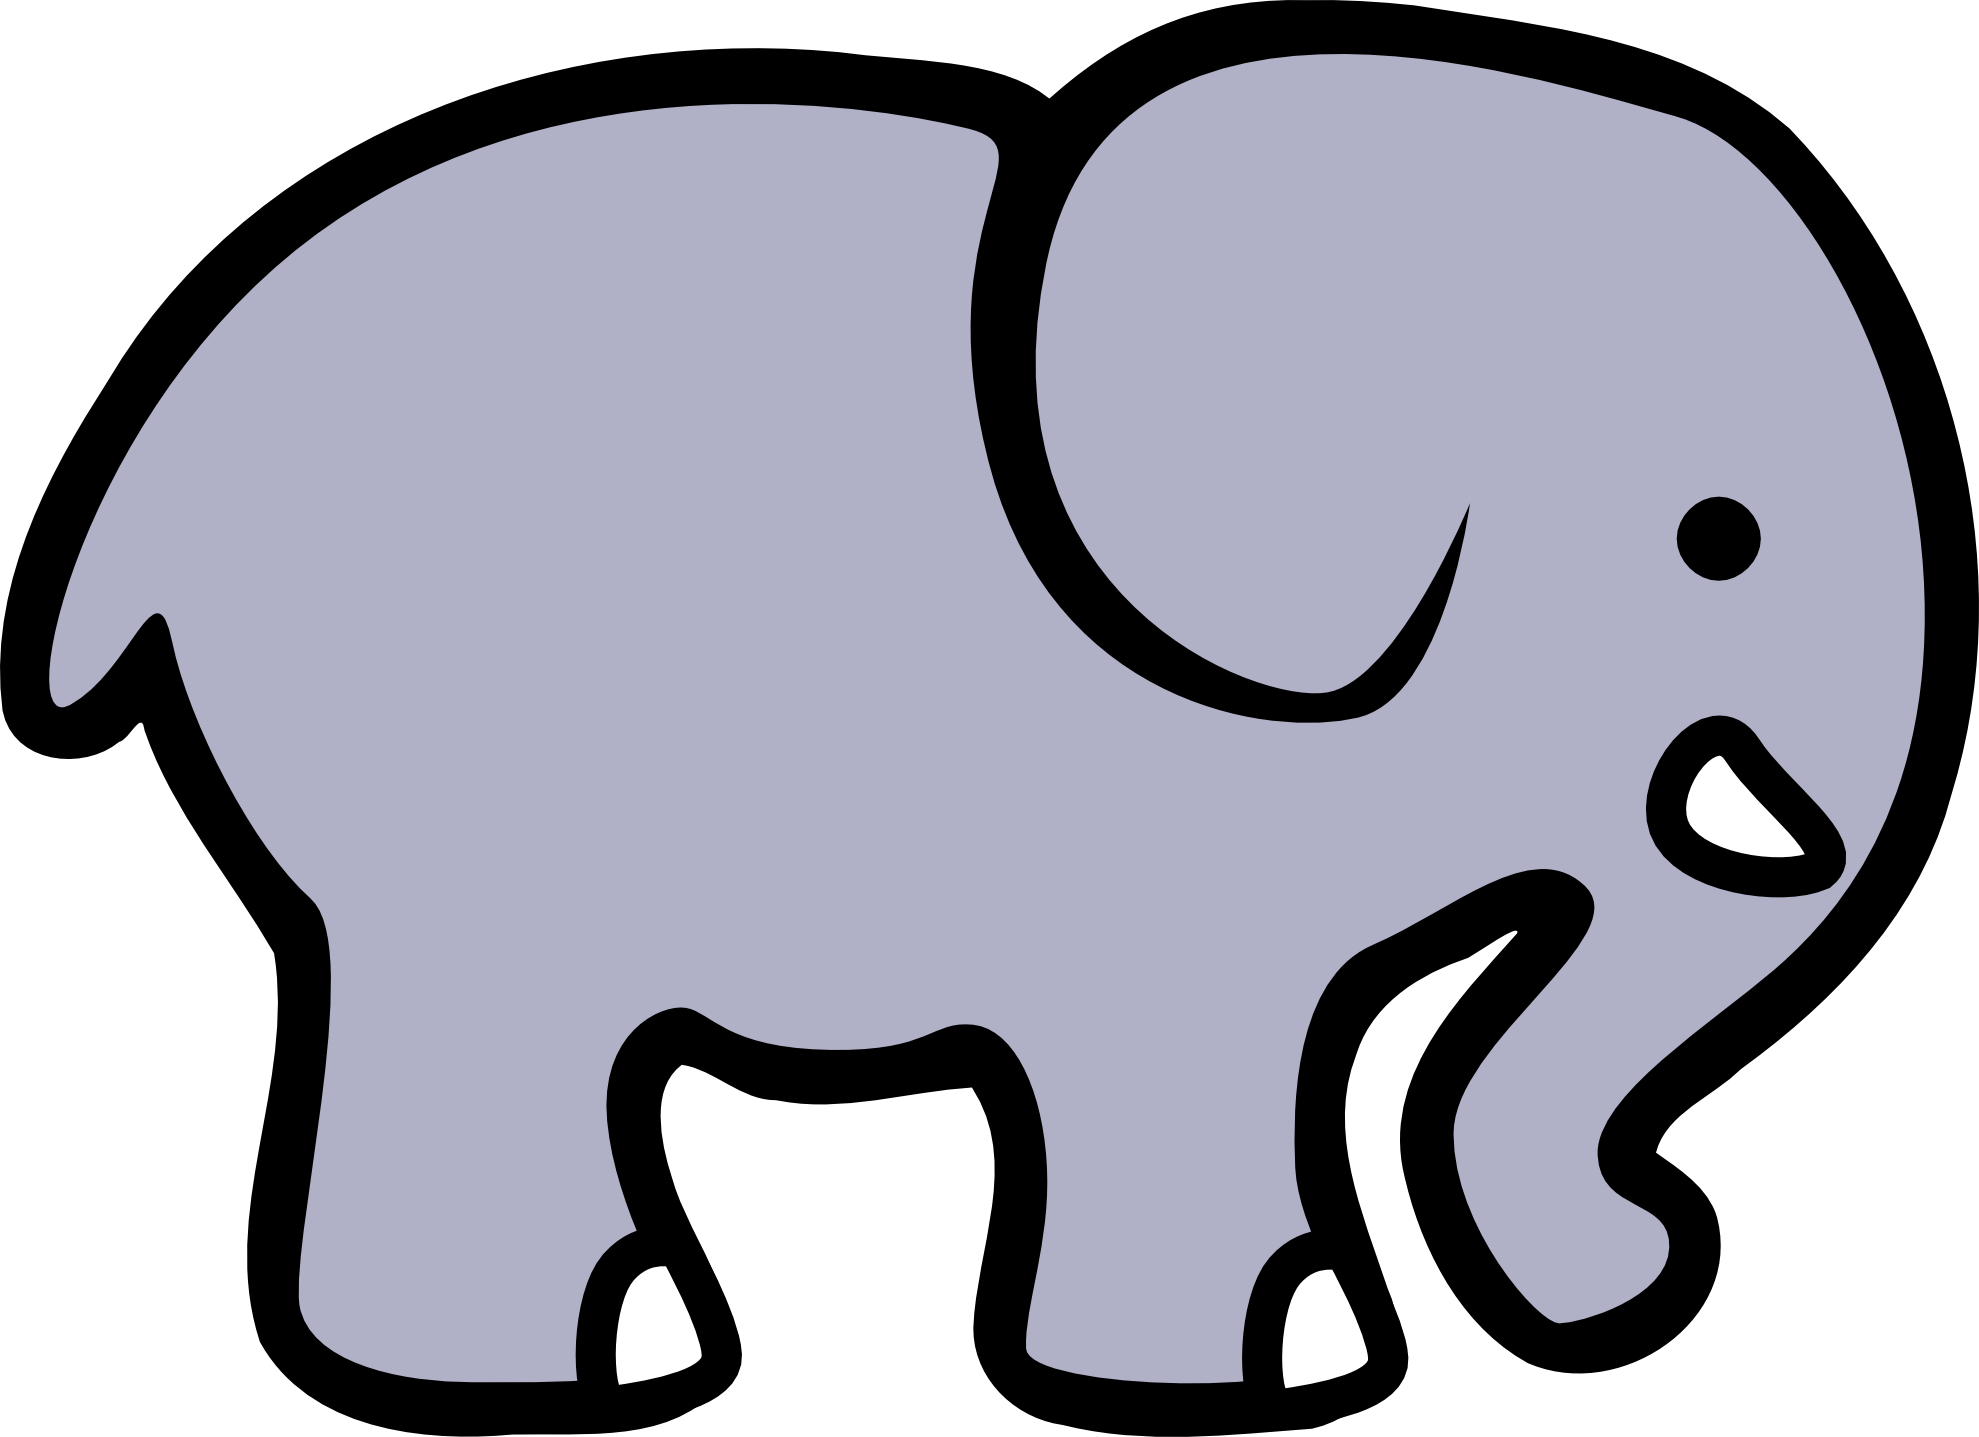 Clipart elephant - ClipartFox